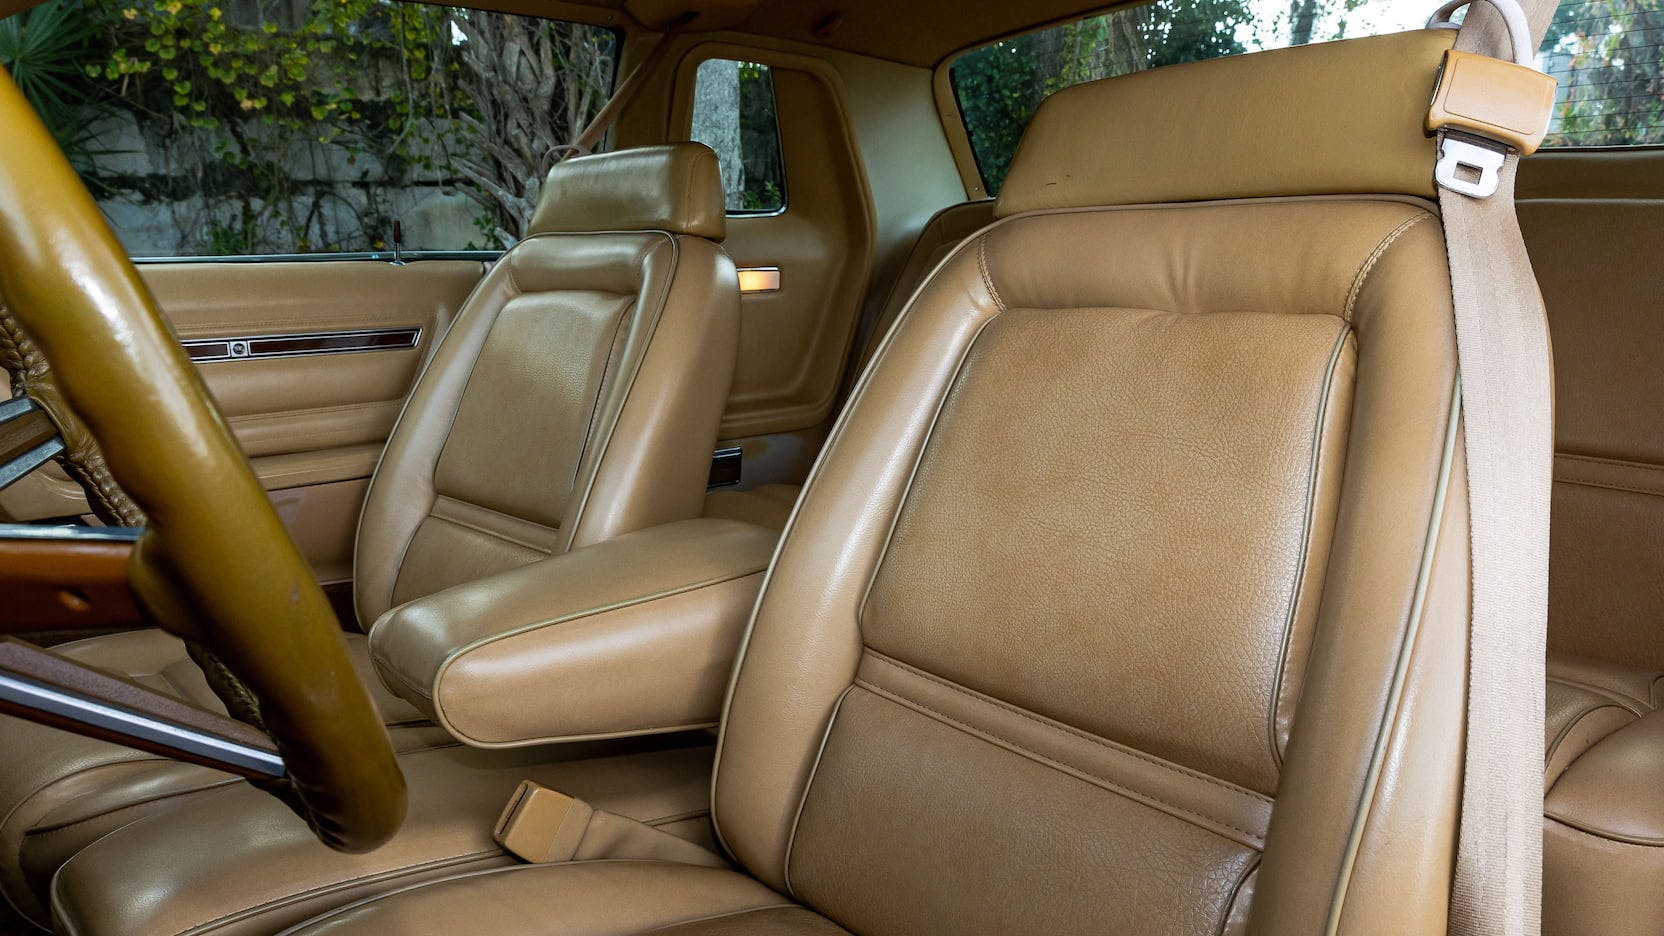 1979 Dodge Magnum XE interior seats